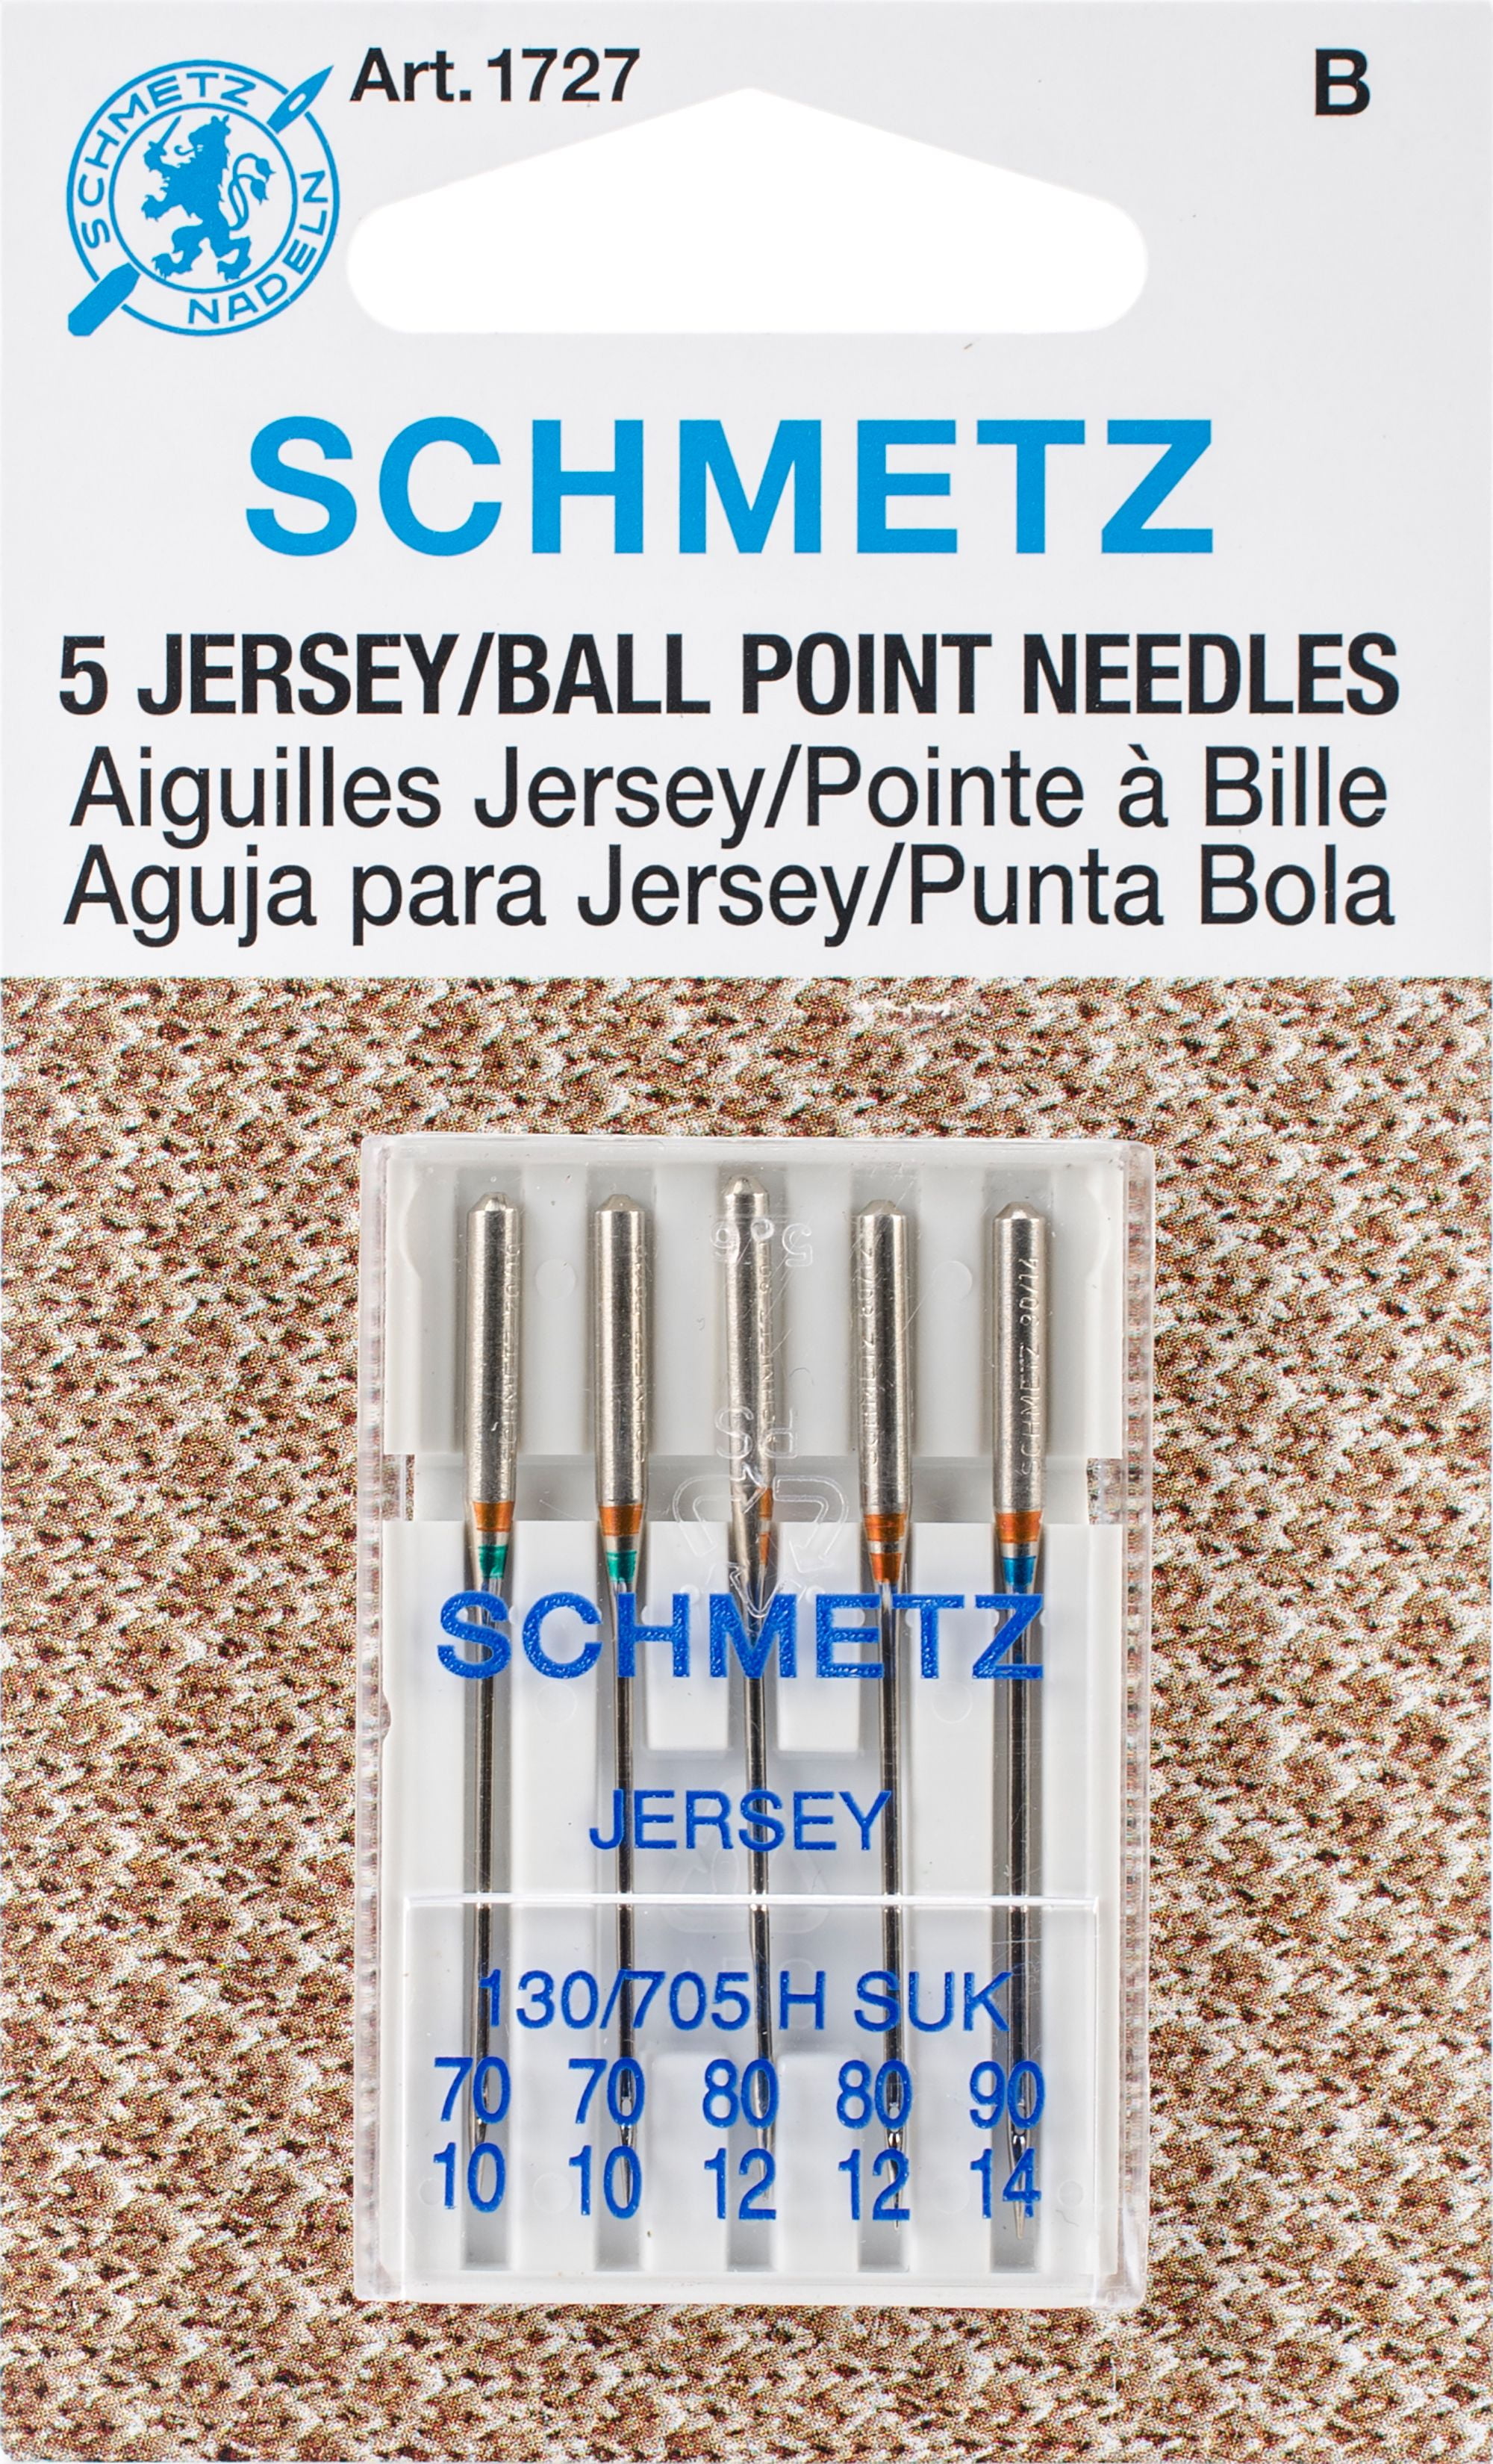 Klasse Ball Point Needles size 90/14 — Fabric Shack